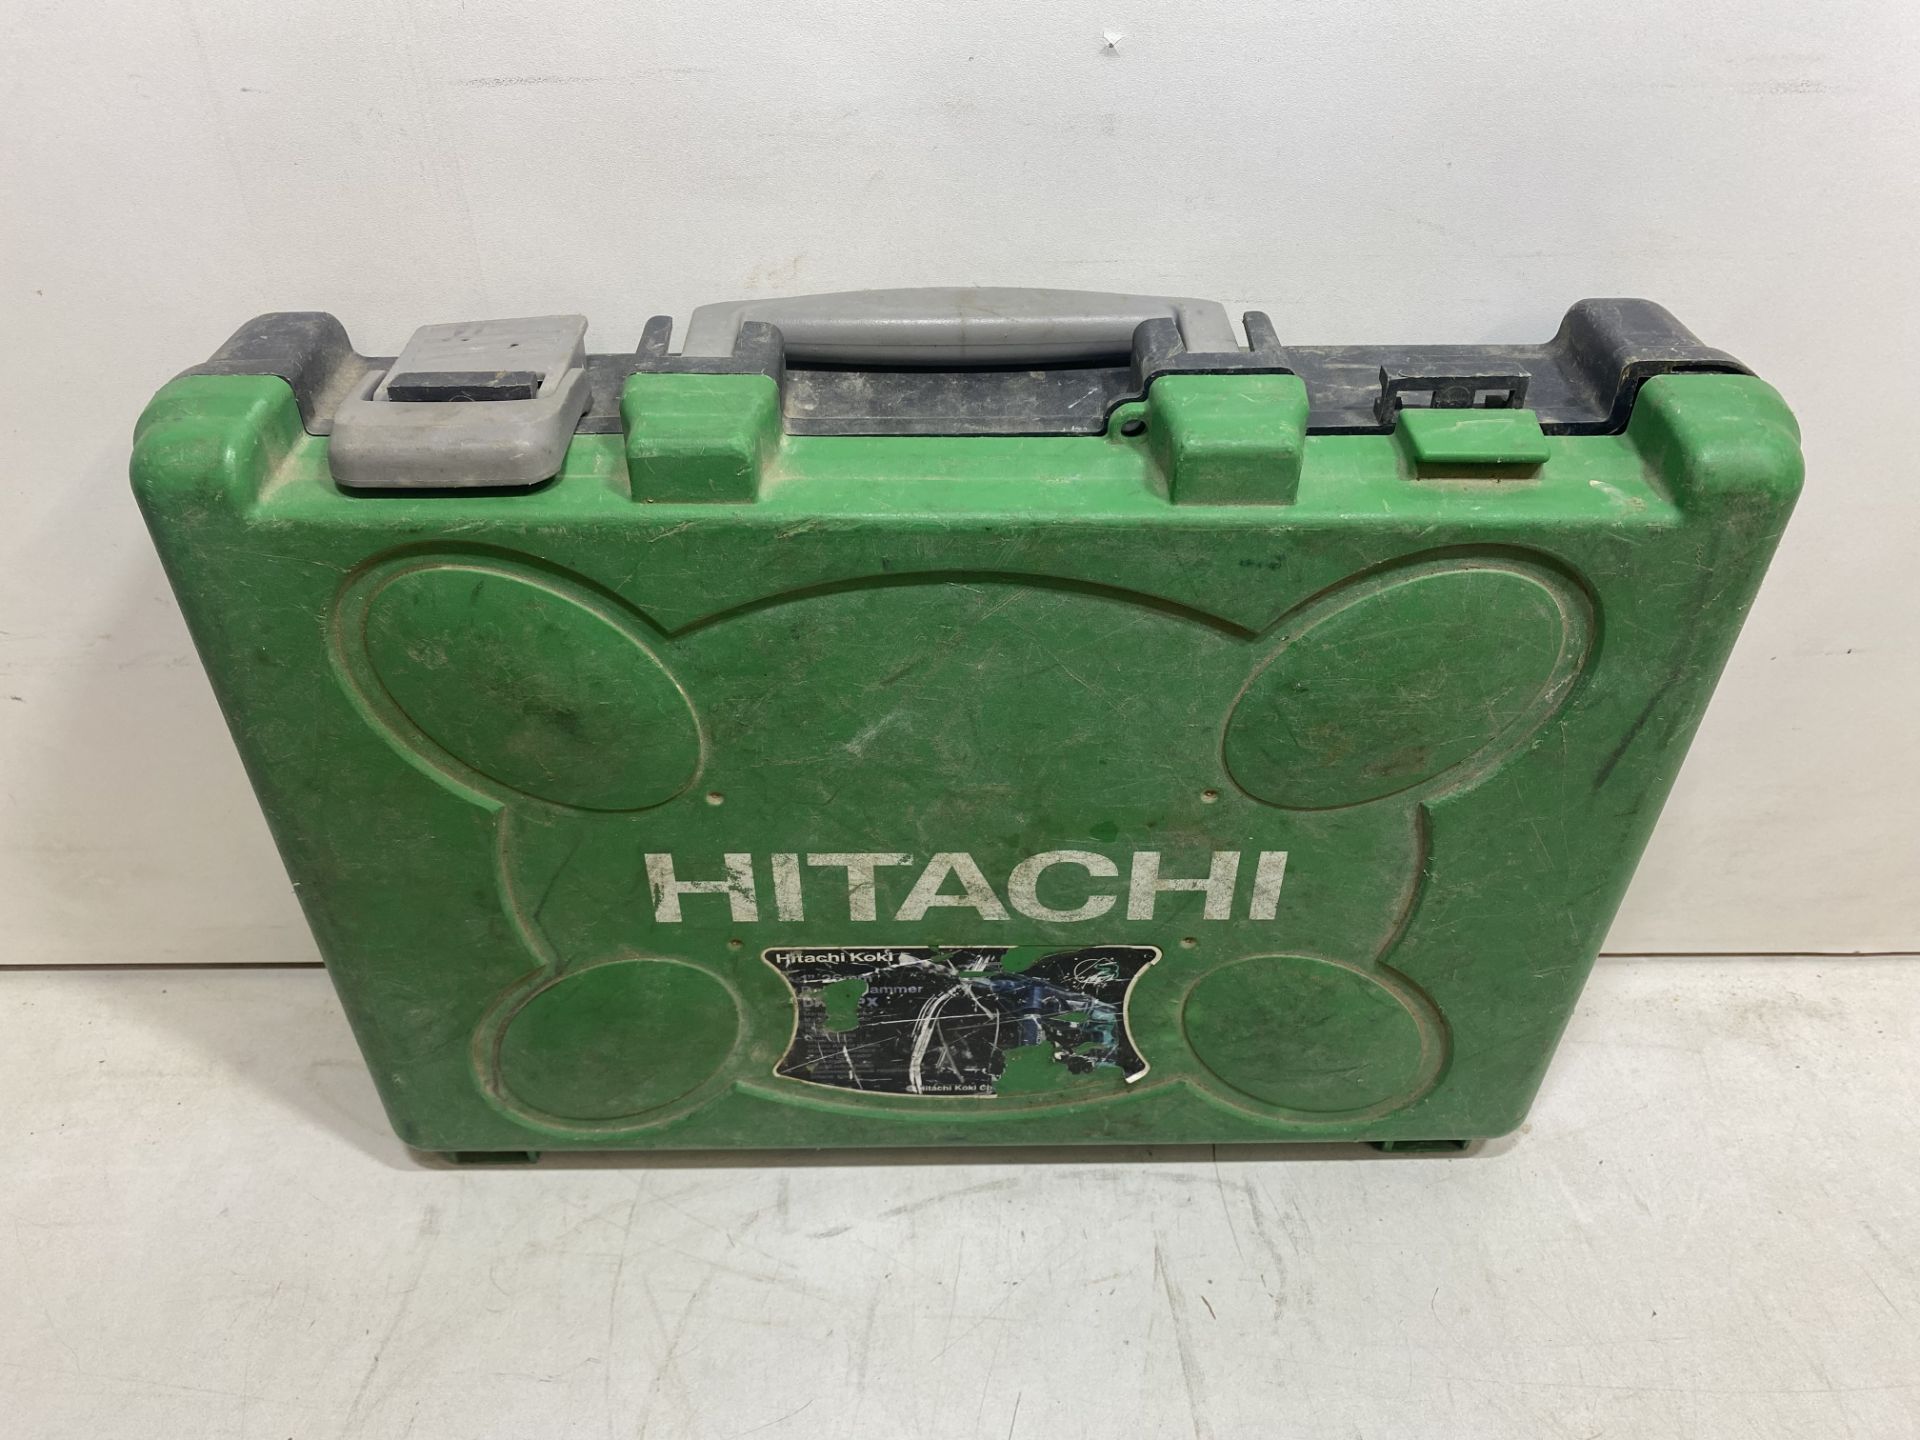 Hitachi DH26PX Rotary Hammer Drill, 110v - Image 7 of 7